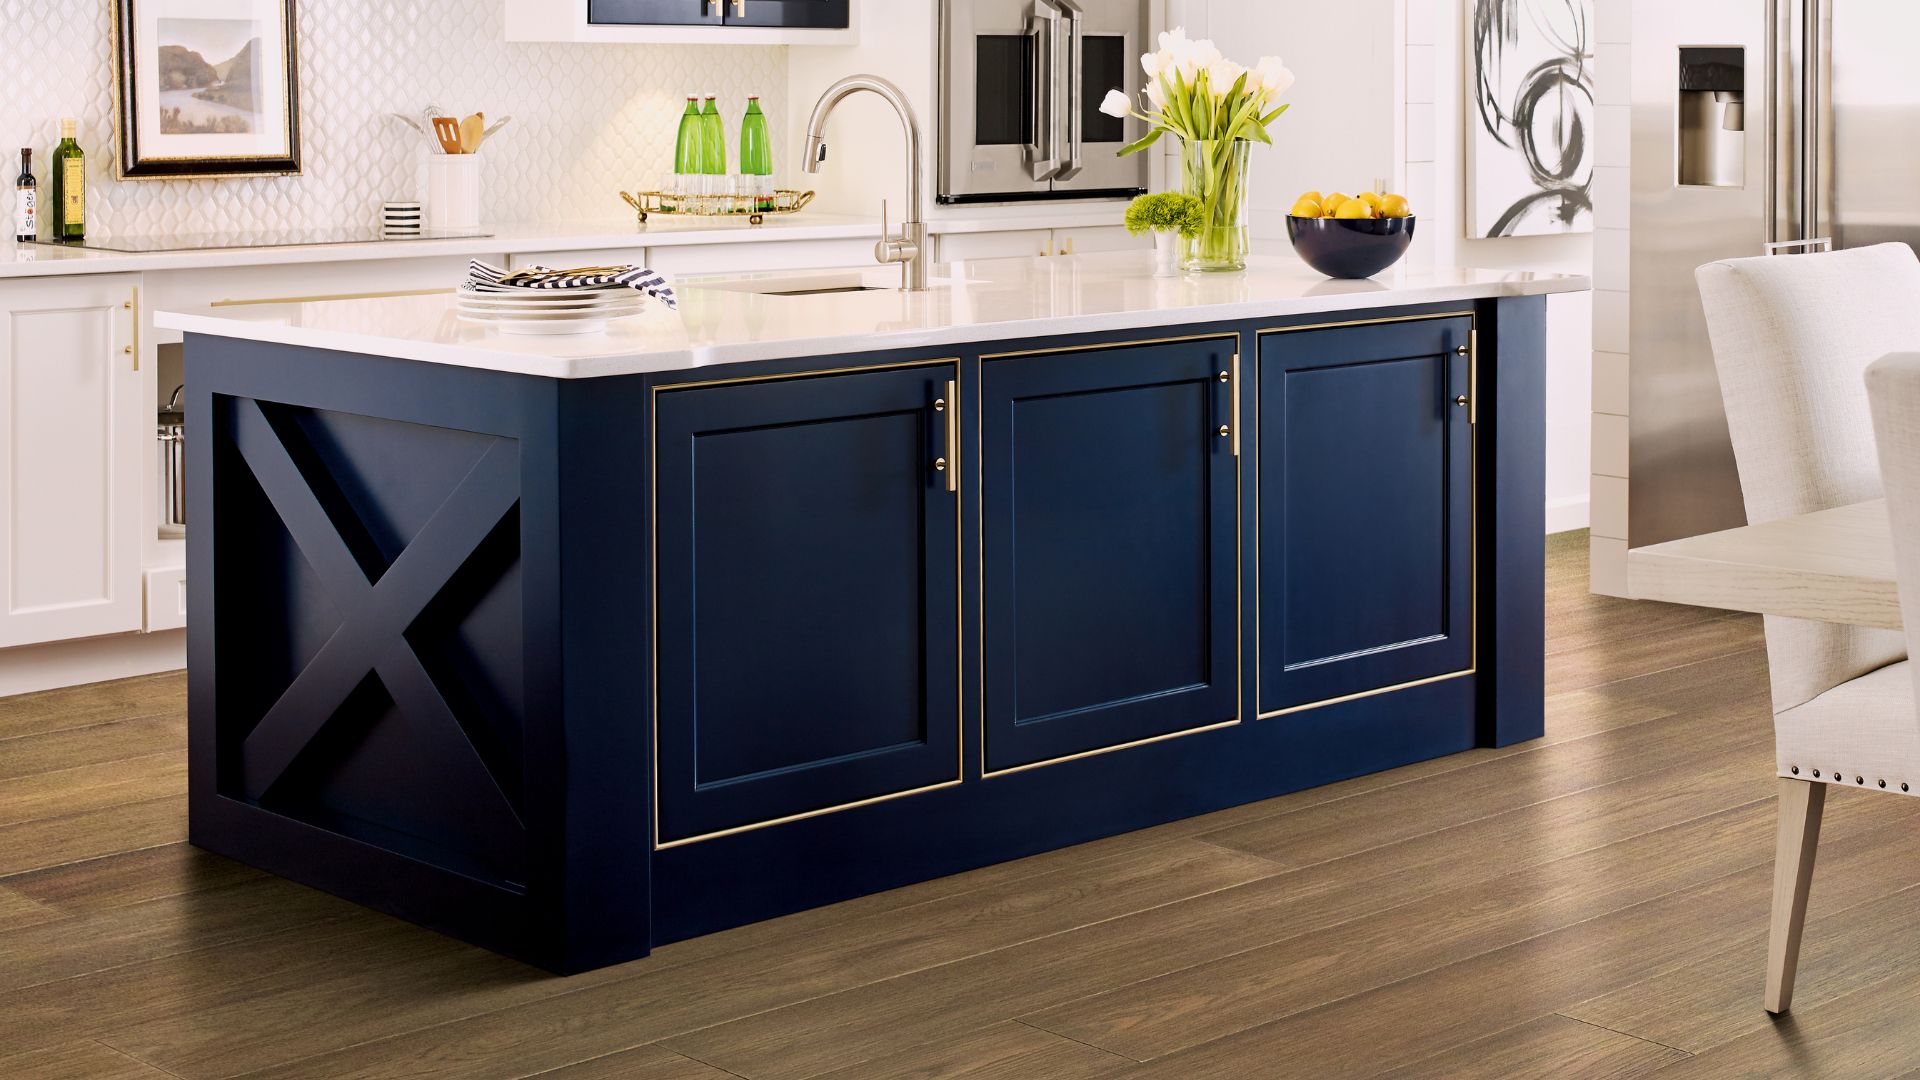 hardwood flooring in a modern kitchen with blue island 